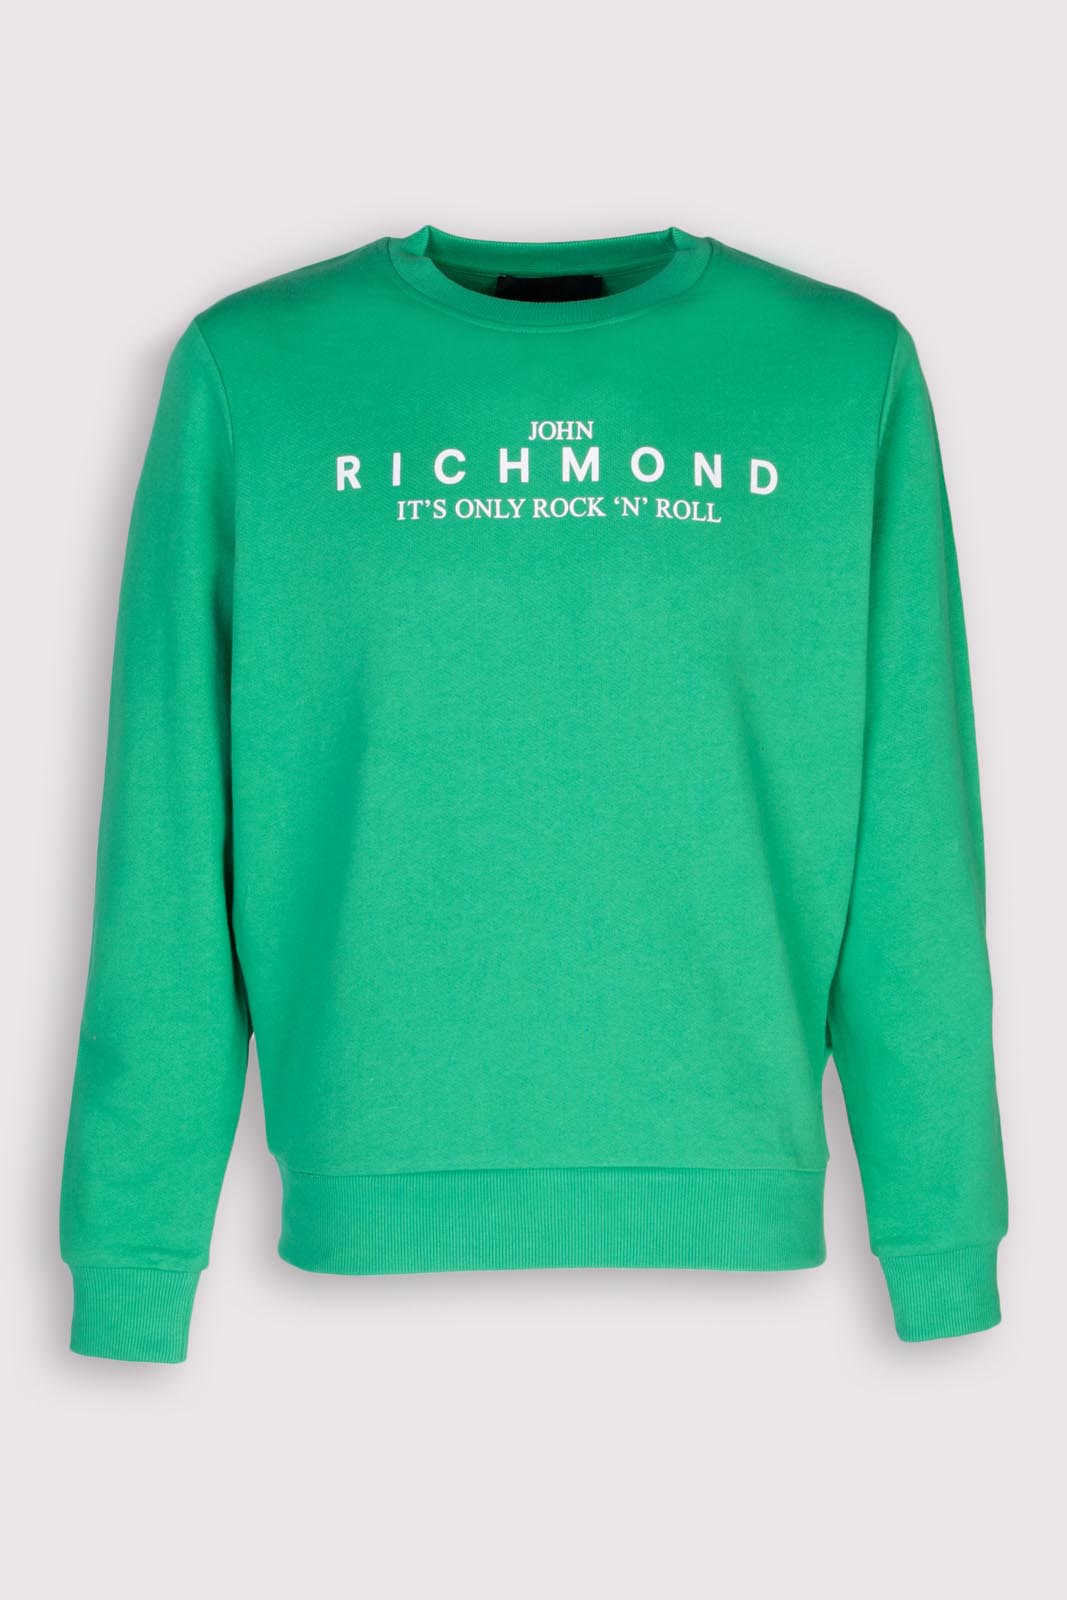 JOHN RICHMOND Pullover Sweatshirt Size S Logo 'IT'S ONLY ROCK 'N' ROLL' Front gallery main photo